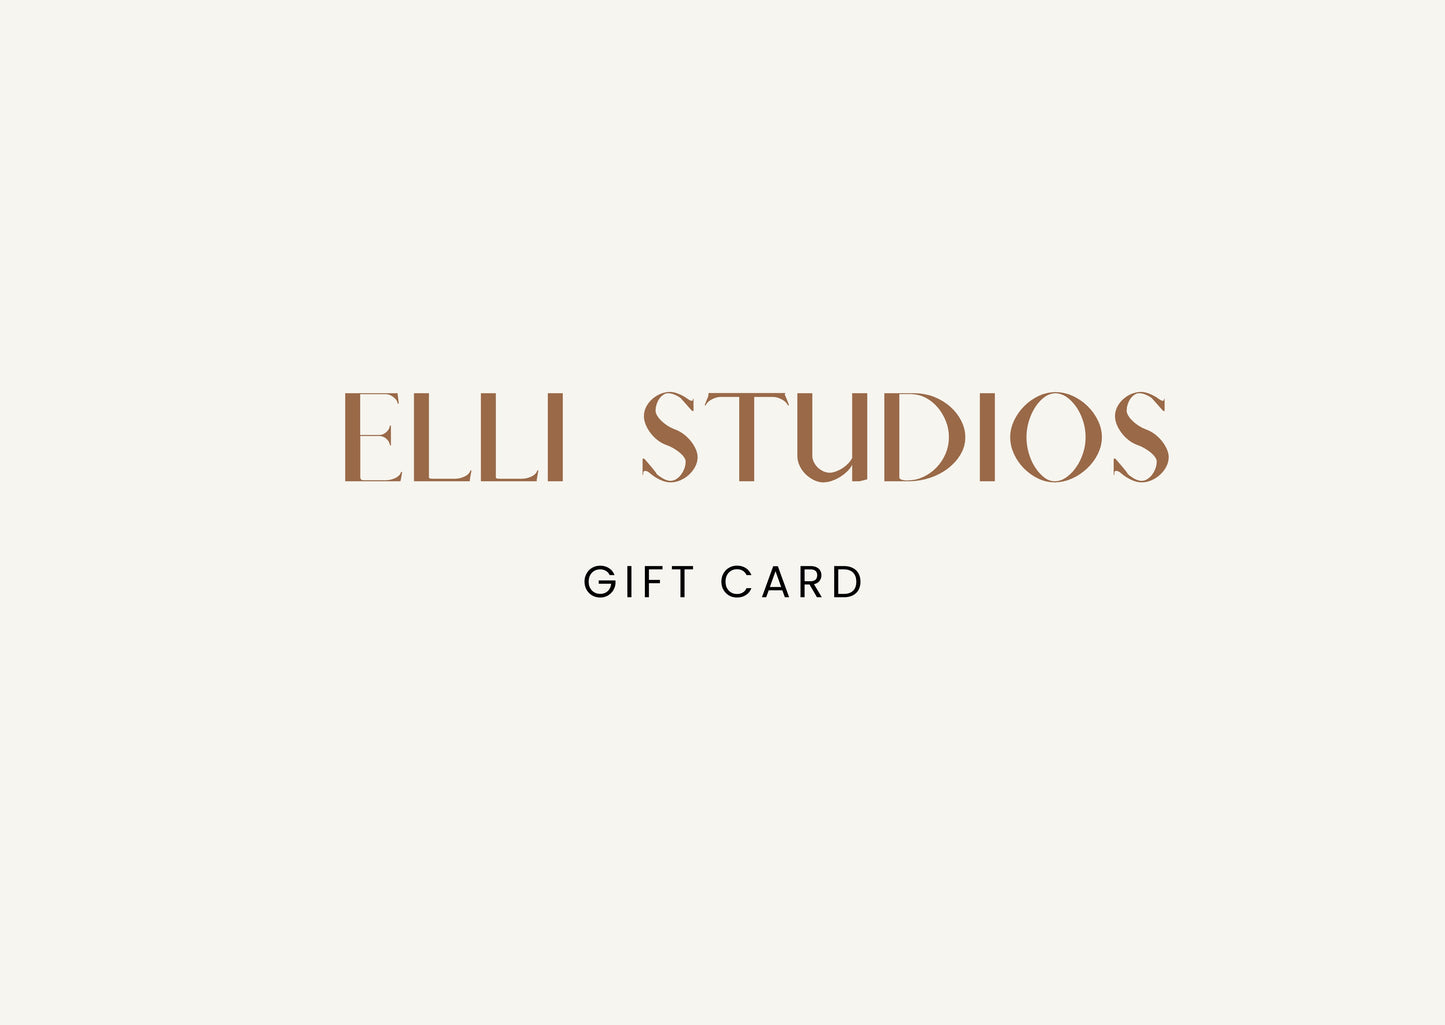 The Elli Studios Gift Card